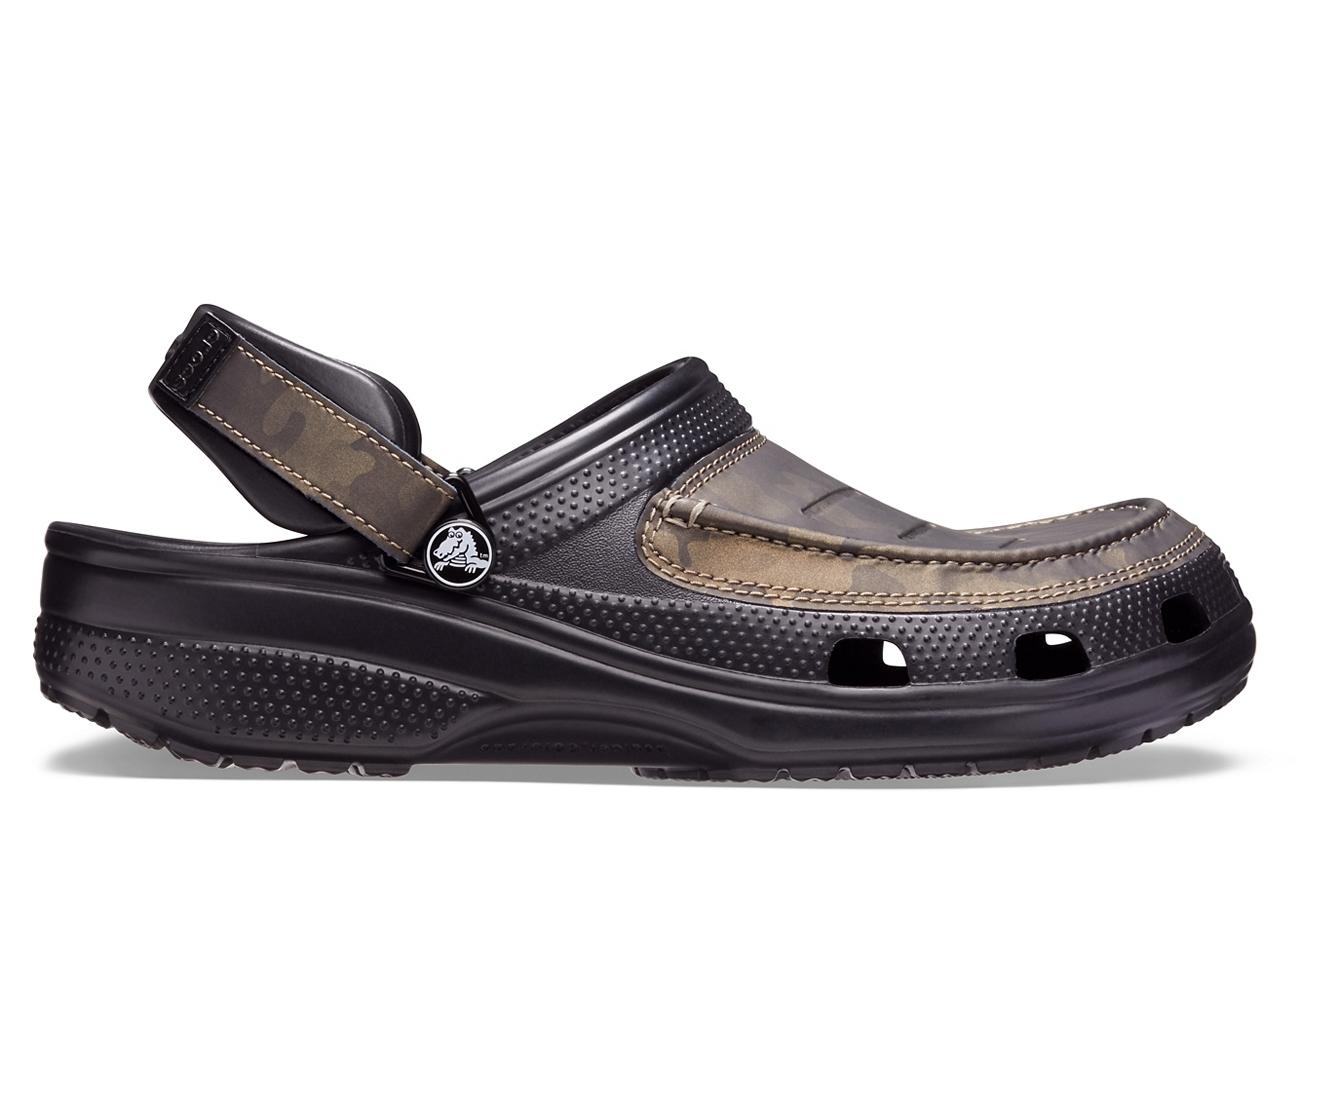 Crocs™ Yukon Vista Camo Clog in Black/Camo (Black) for Men - Lyst